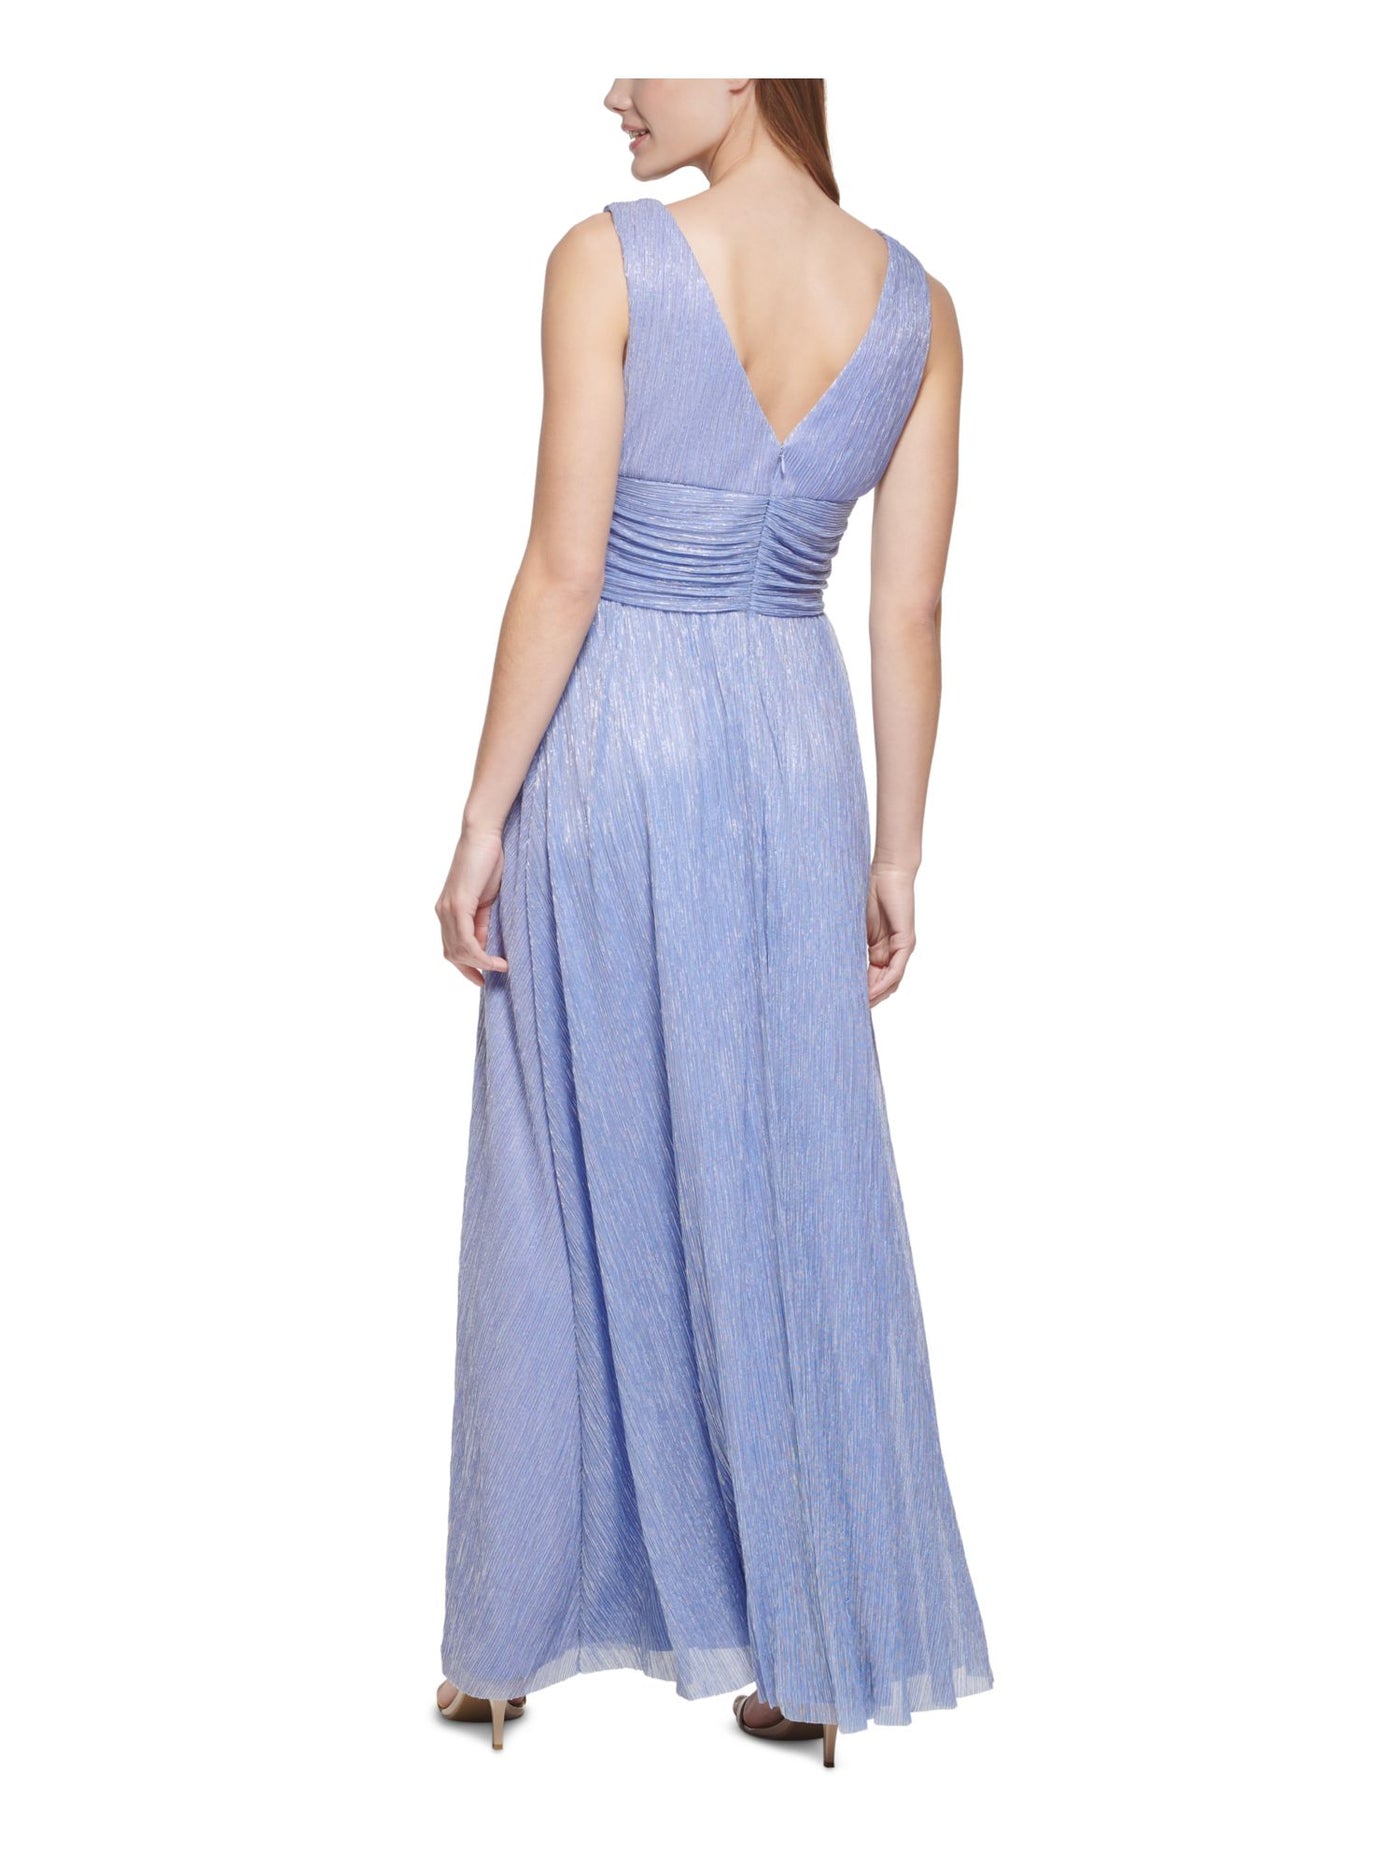 ELIZA J Womens Blue Metallic Bow Sleeveless Surplice Neckline Full-Length Formal Gown Dress 6